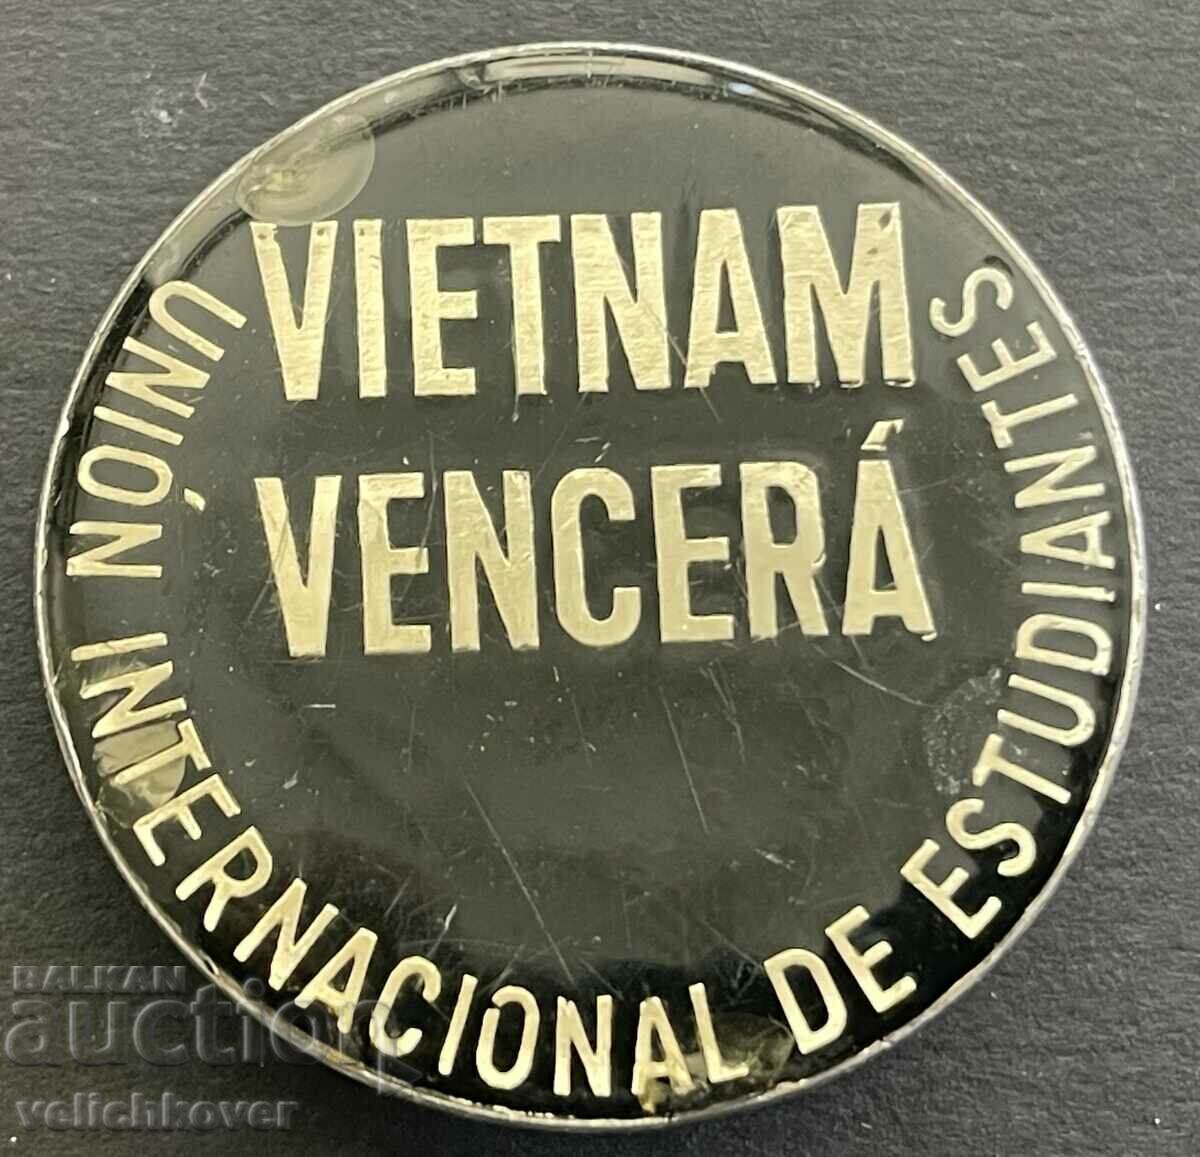 37624 Vietnam Freedom for Vietnam Vietnam War